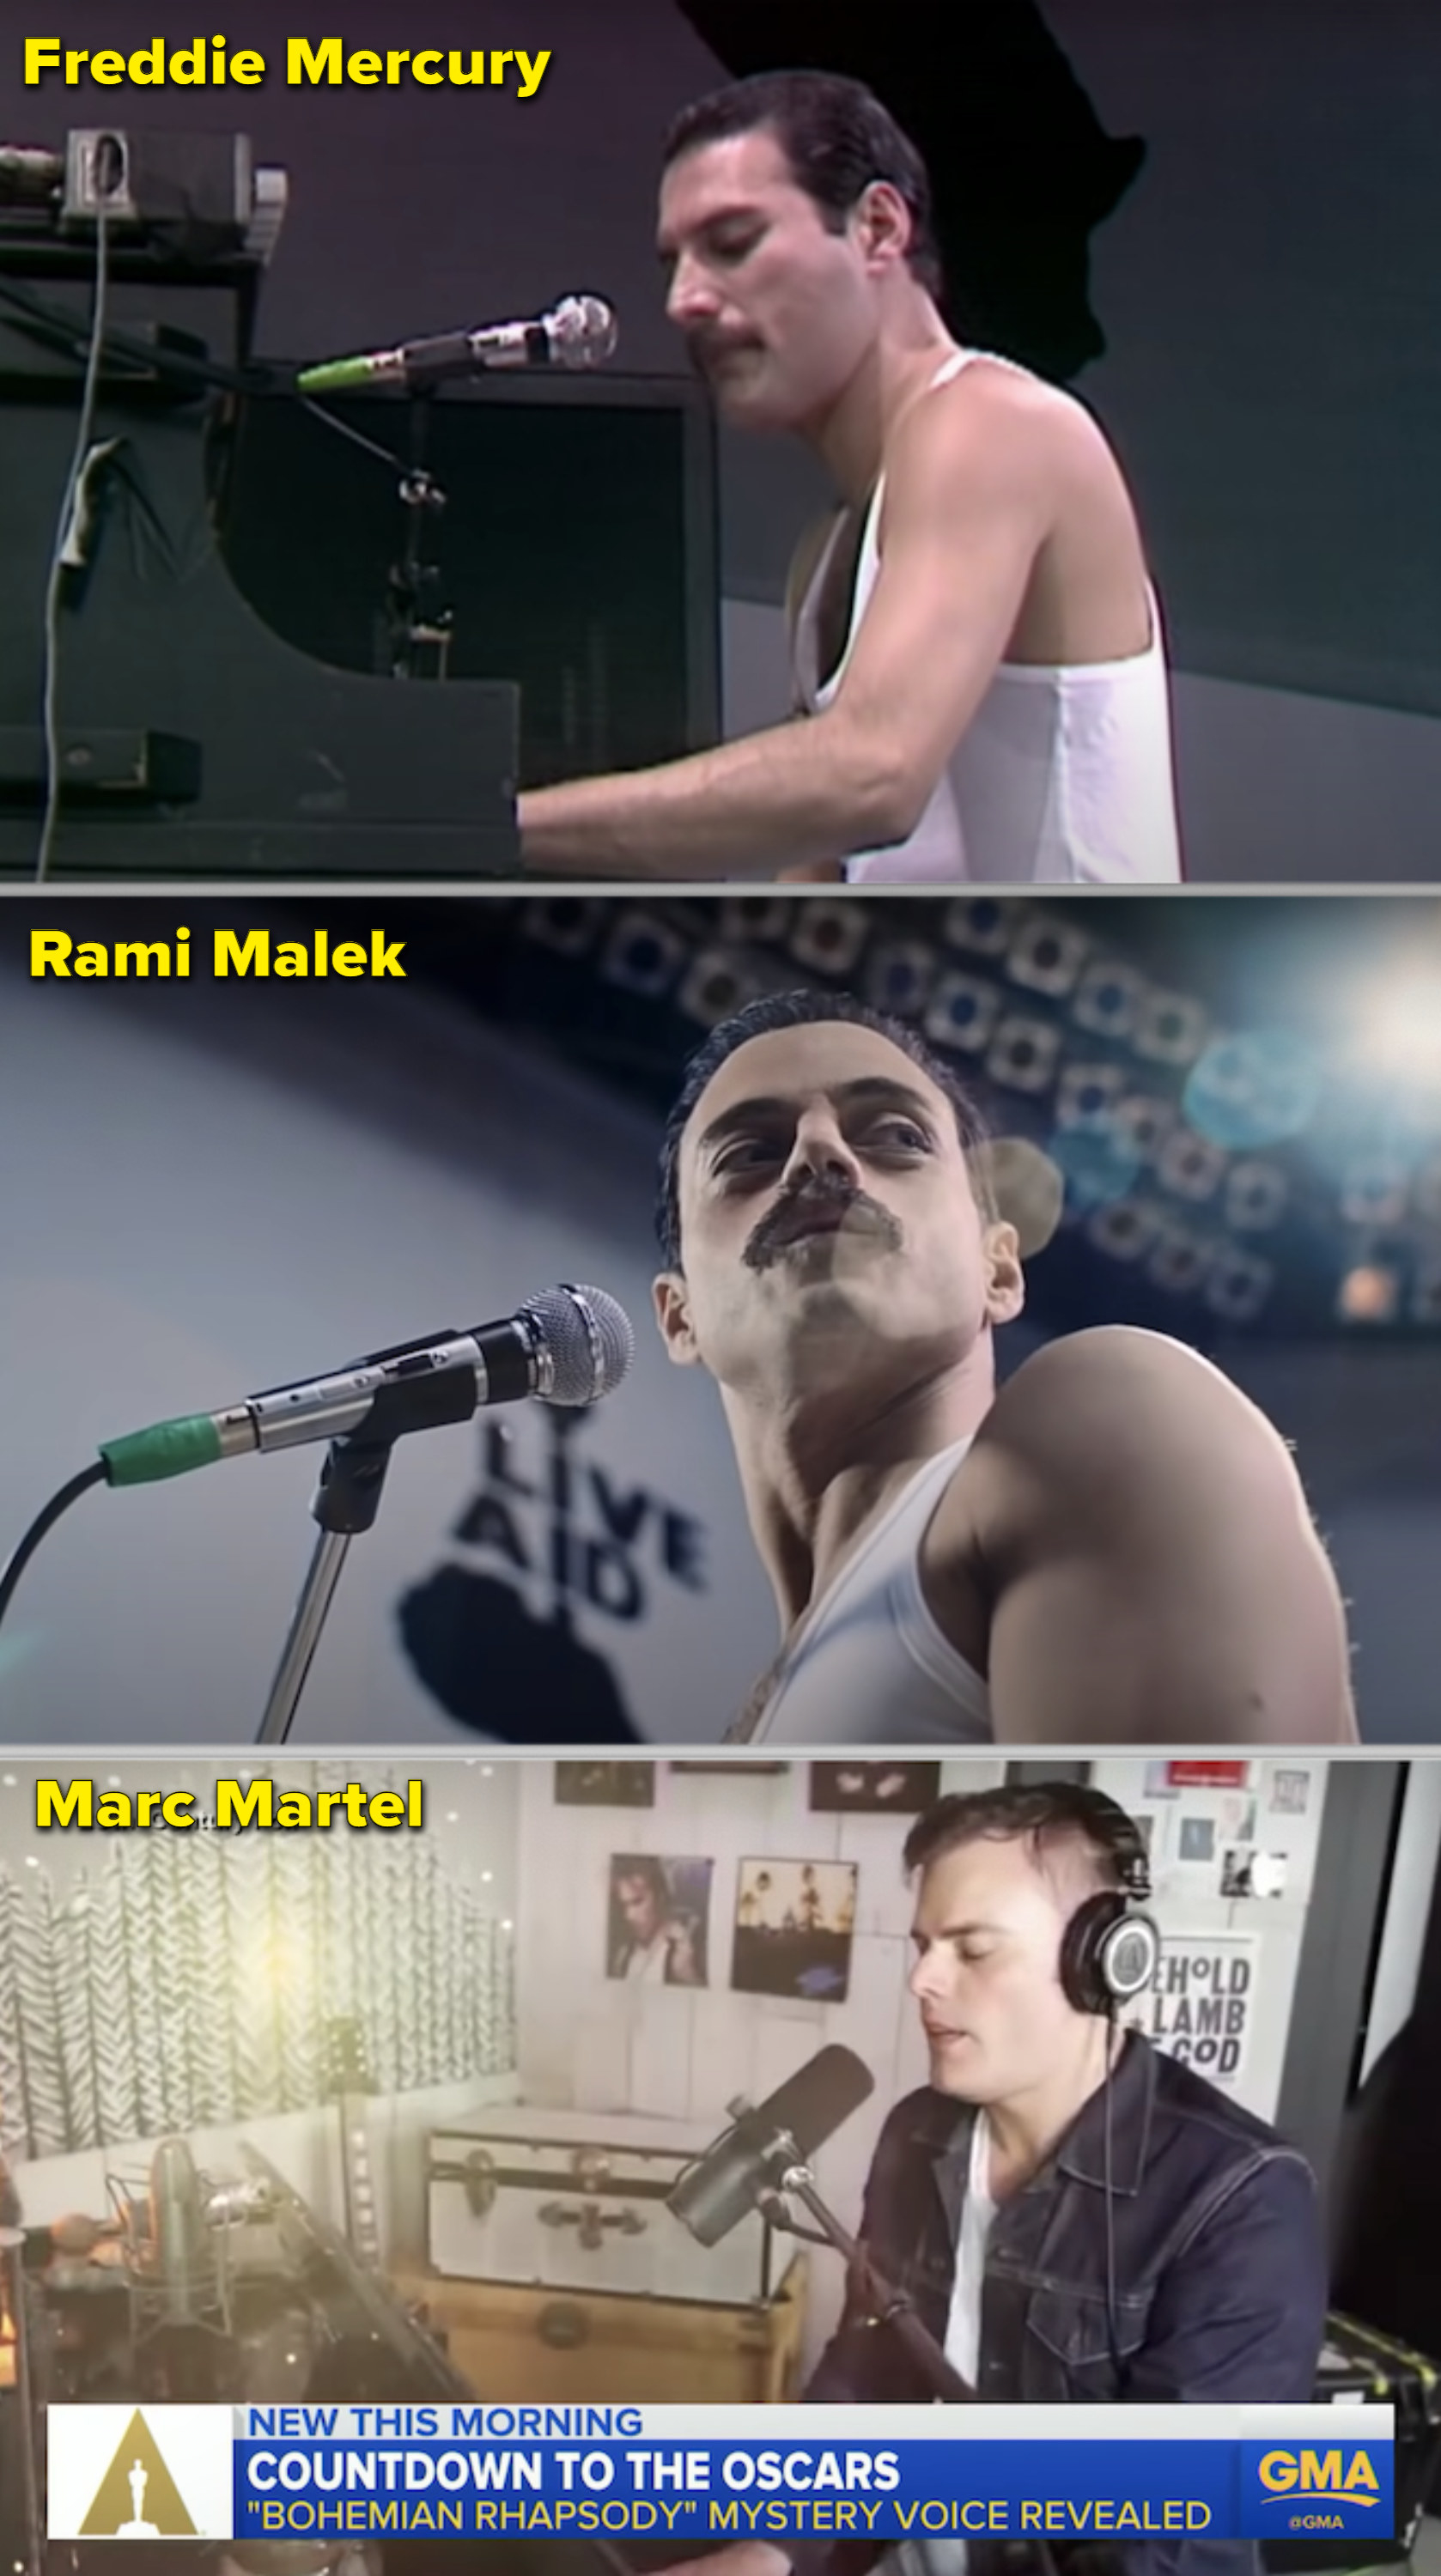 Freddie, Rami, and Marc all singing separately